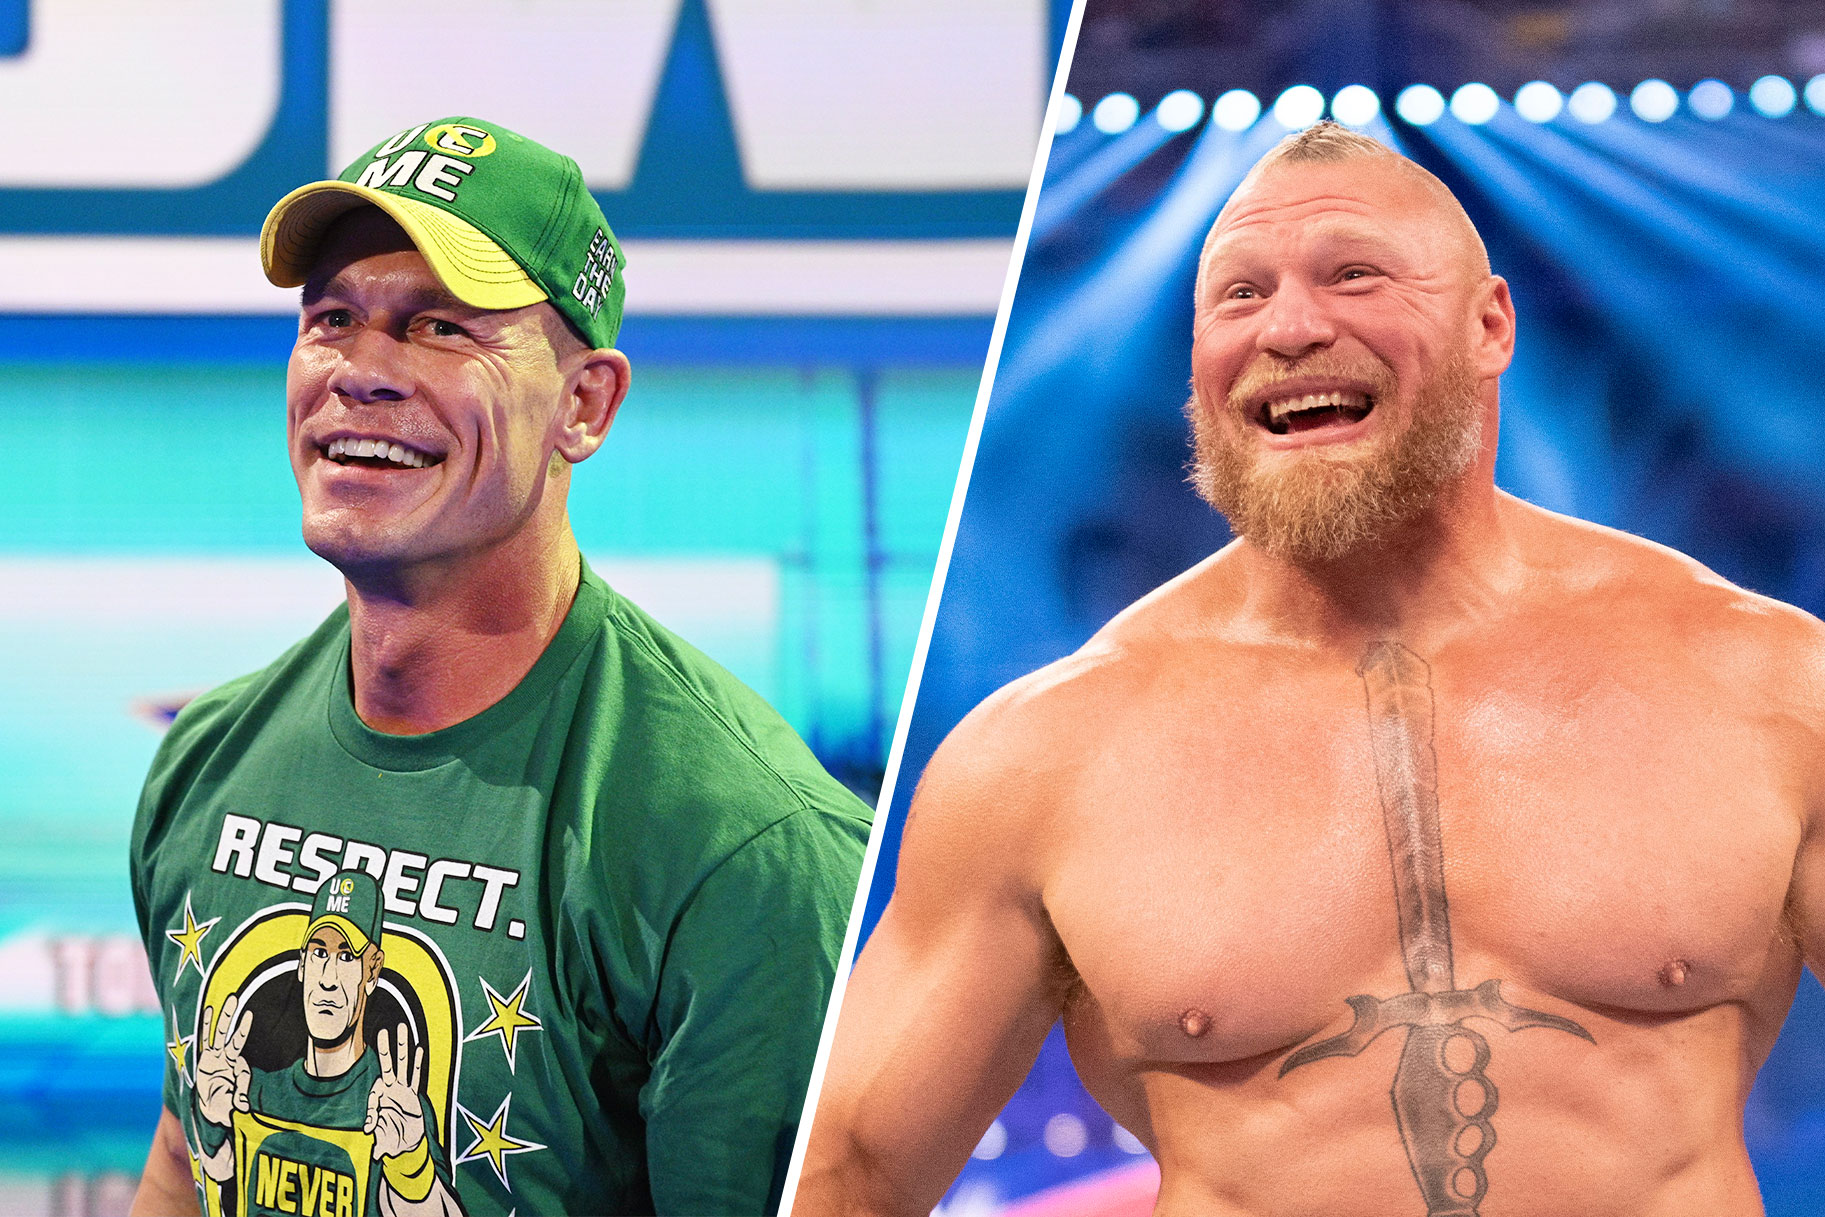 Split image of John Cena and Brock Lesnar